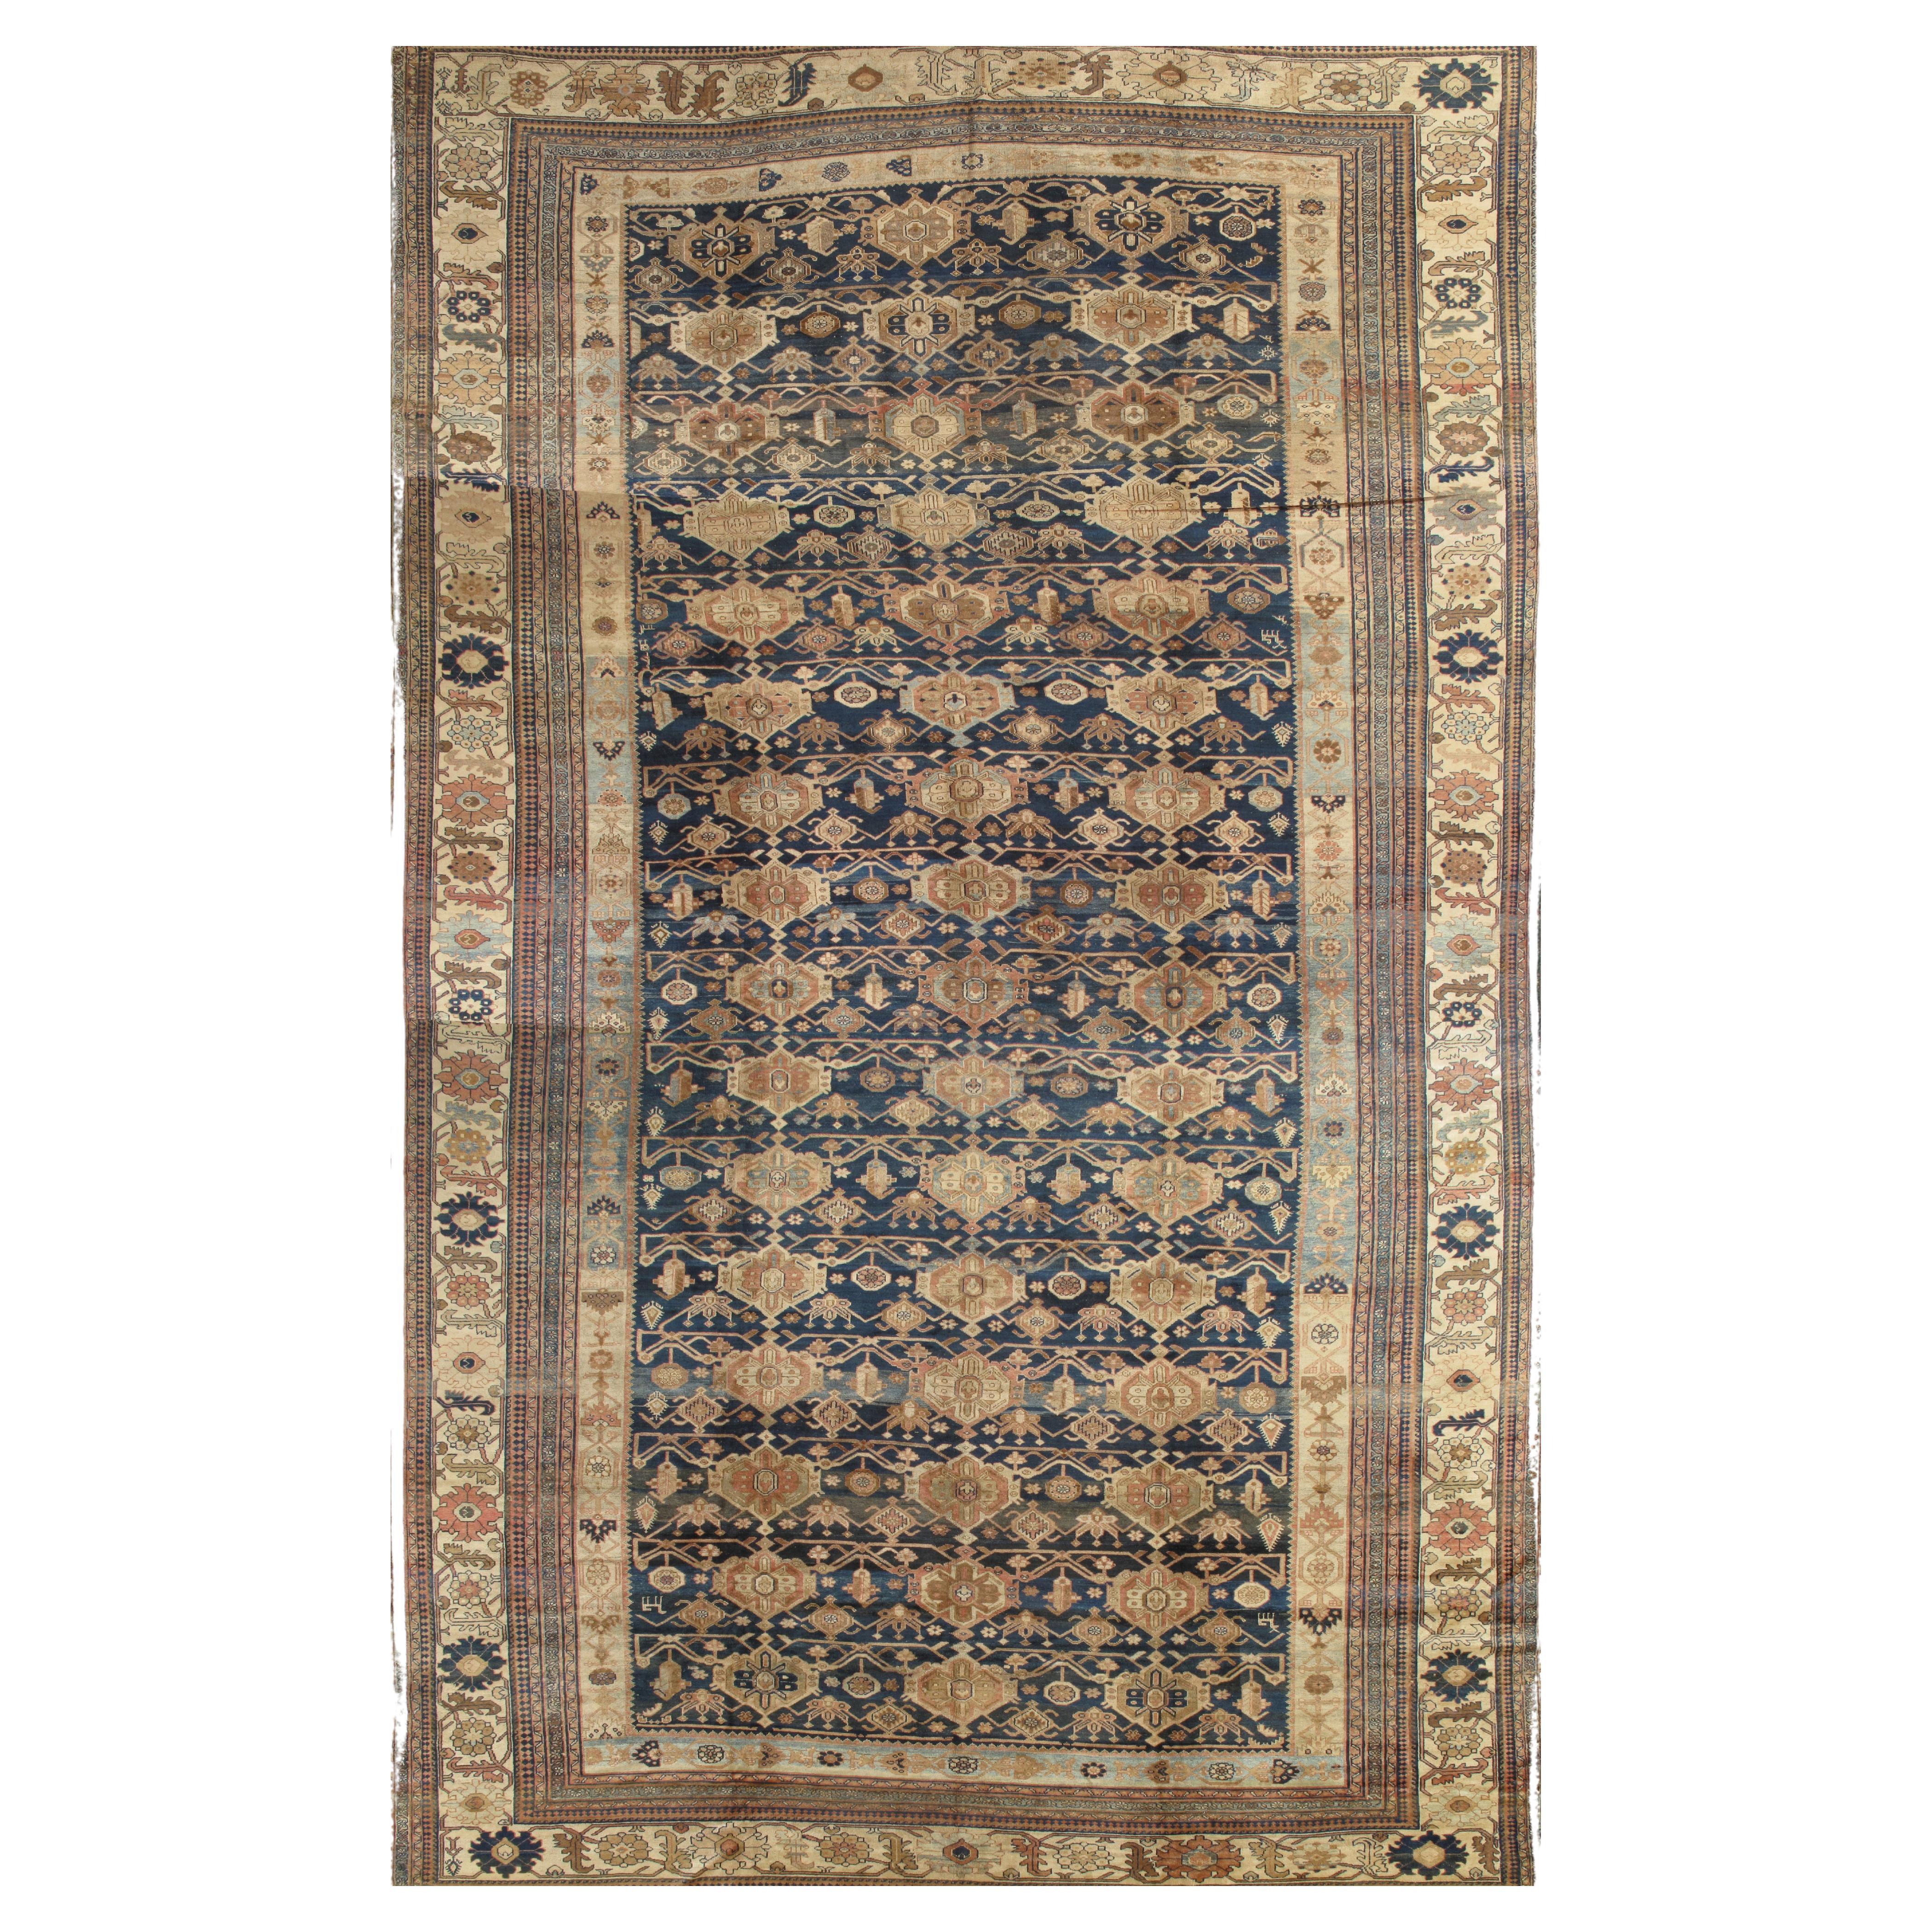 Antique Persian Malayer Carpet, Handmade Oriental Rugs, Navy, Orange, Cream